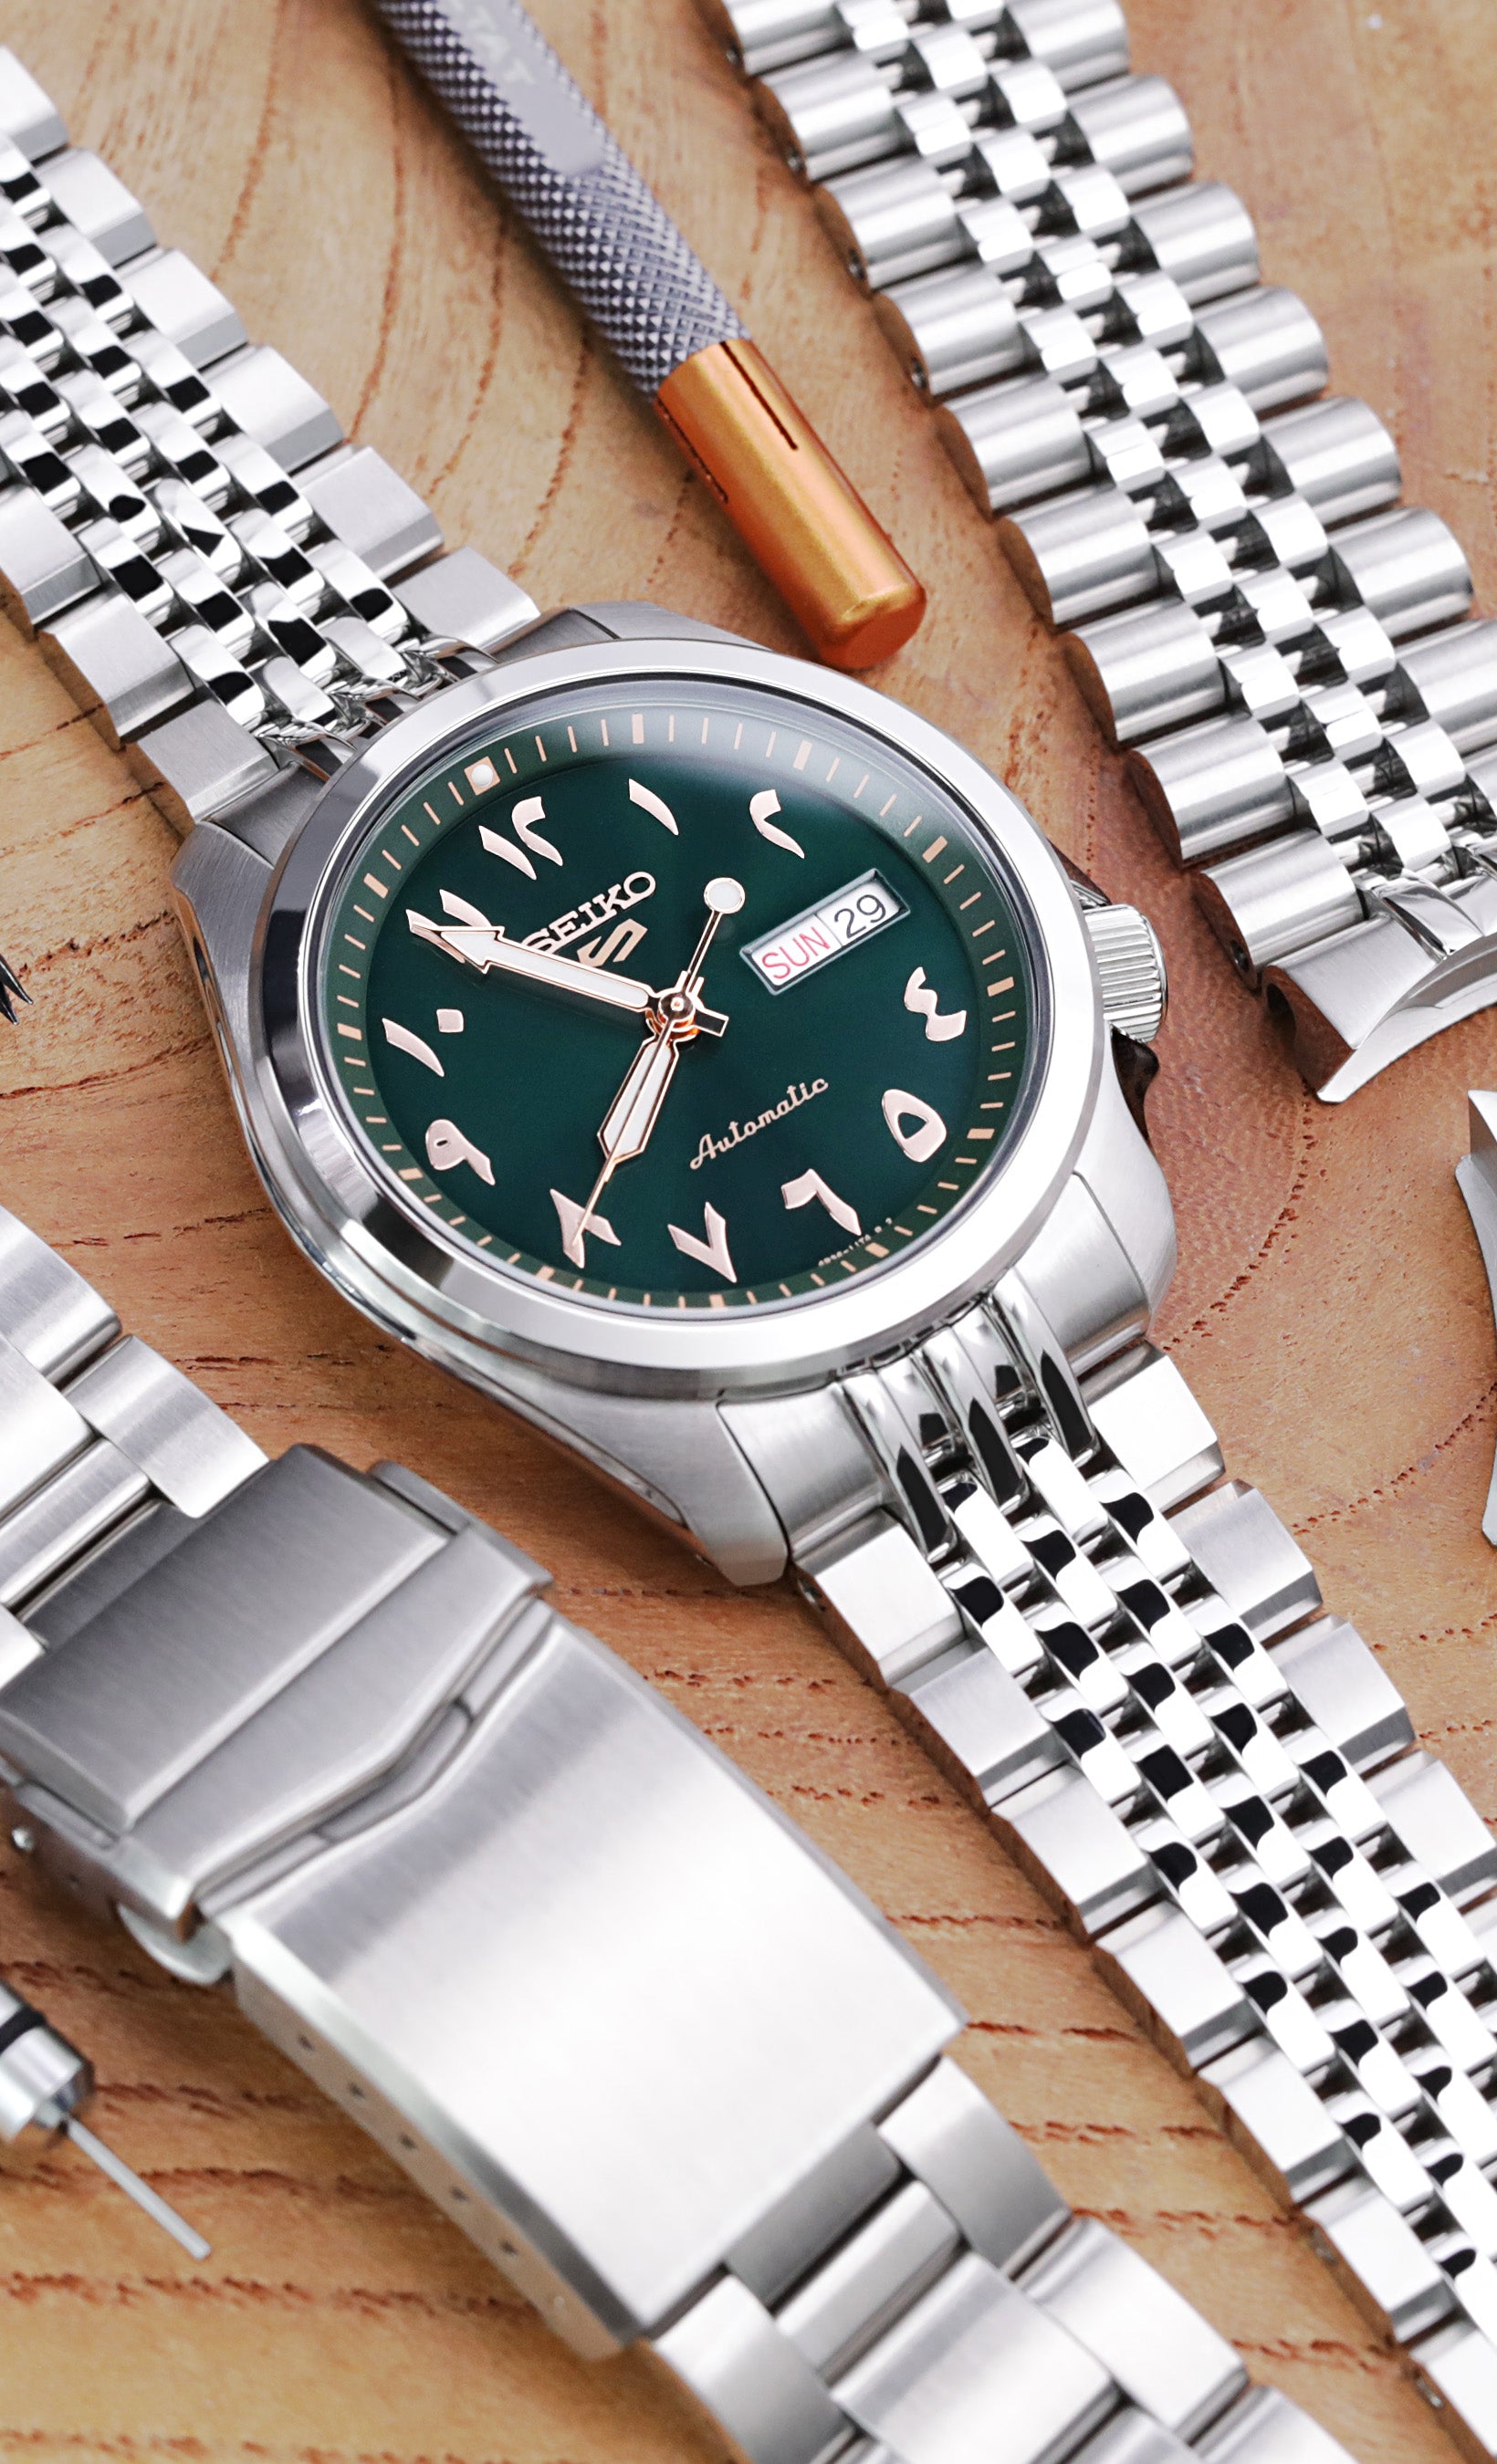 Watch Bands, Watch Straps, Upgrade your Seiko watch